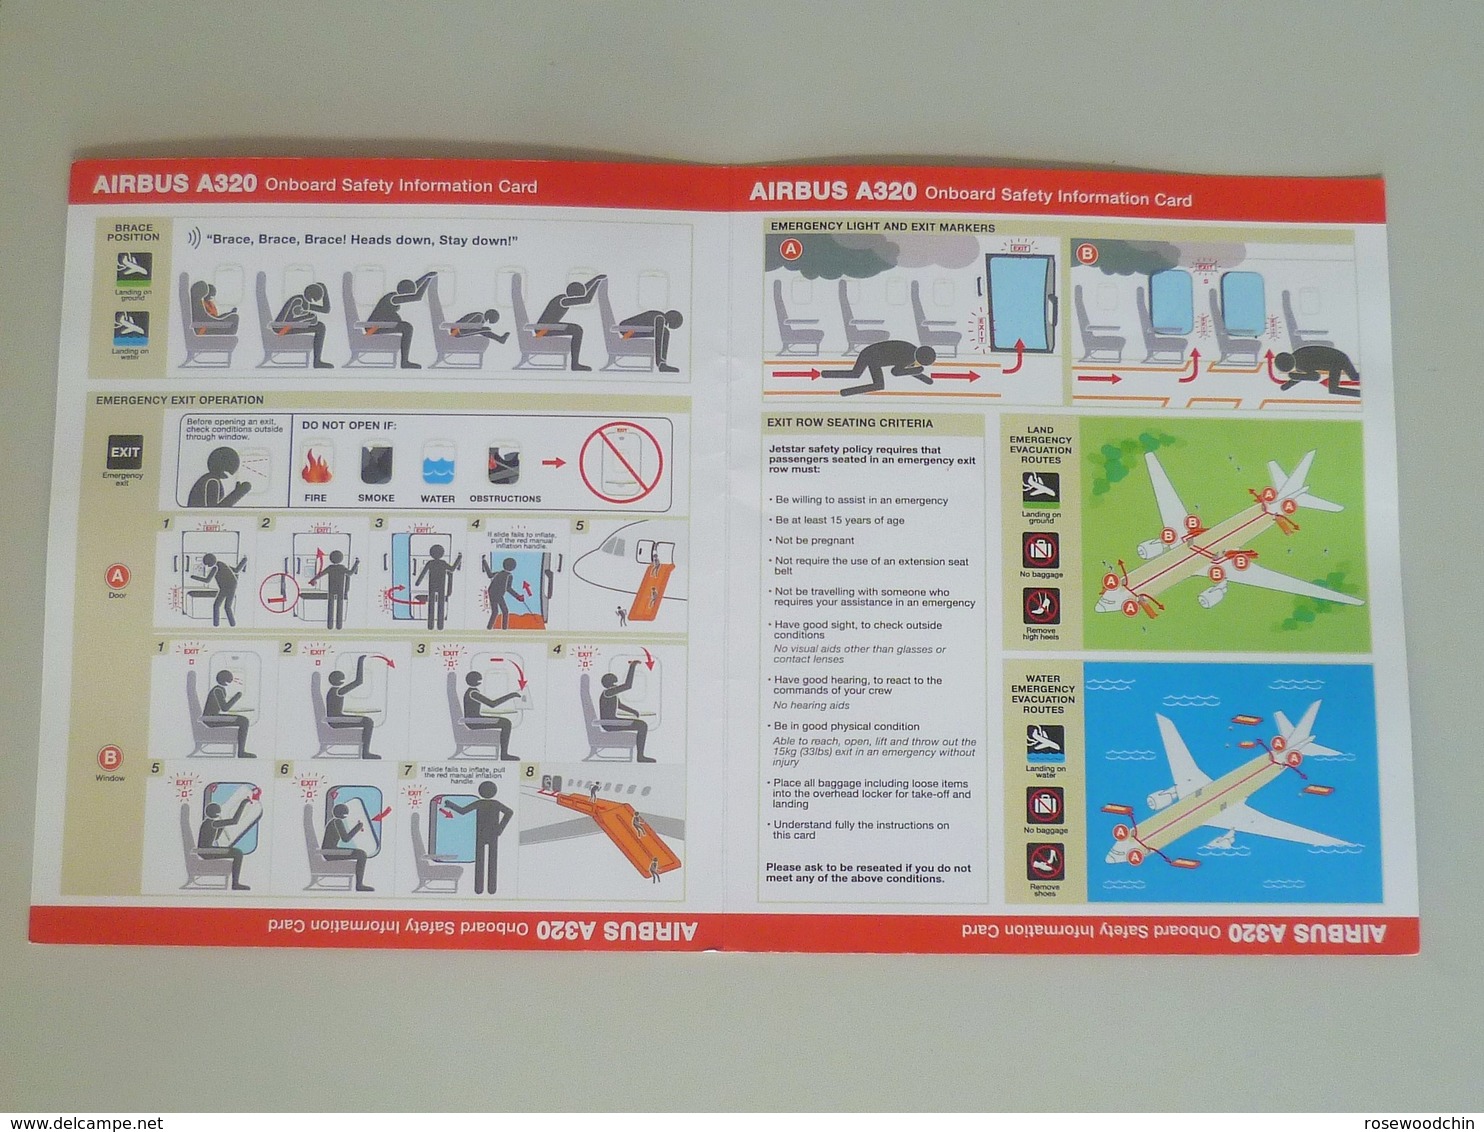 Airlines Jetstar A320 Airbus Onboard Safety Information Card (#3) - Consignes De Sécurité